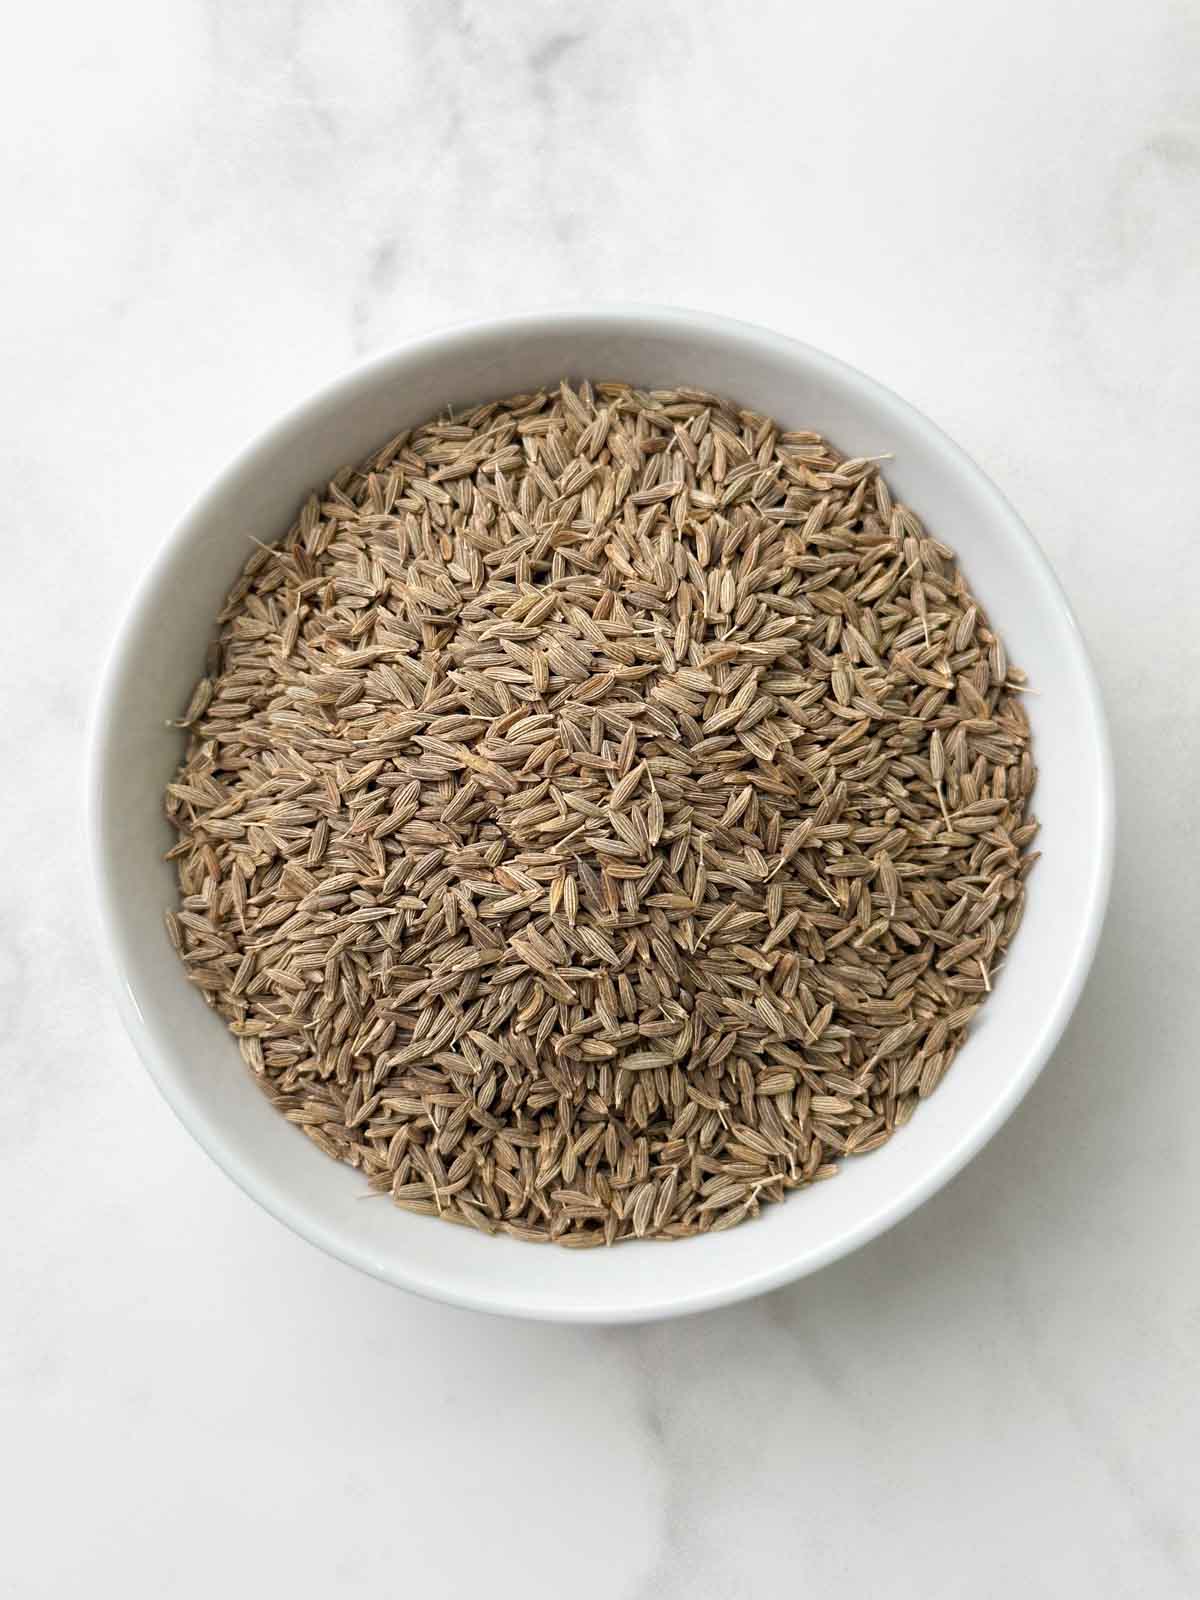 Cumin Seeds (Jeera) in a bowl